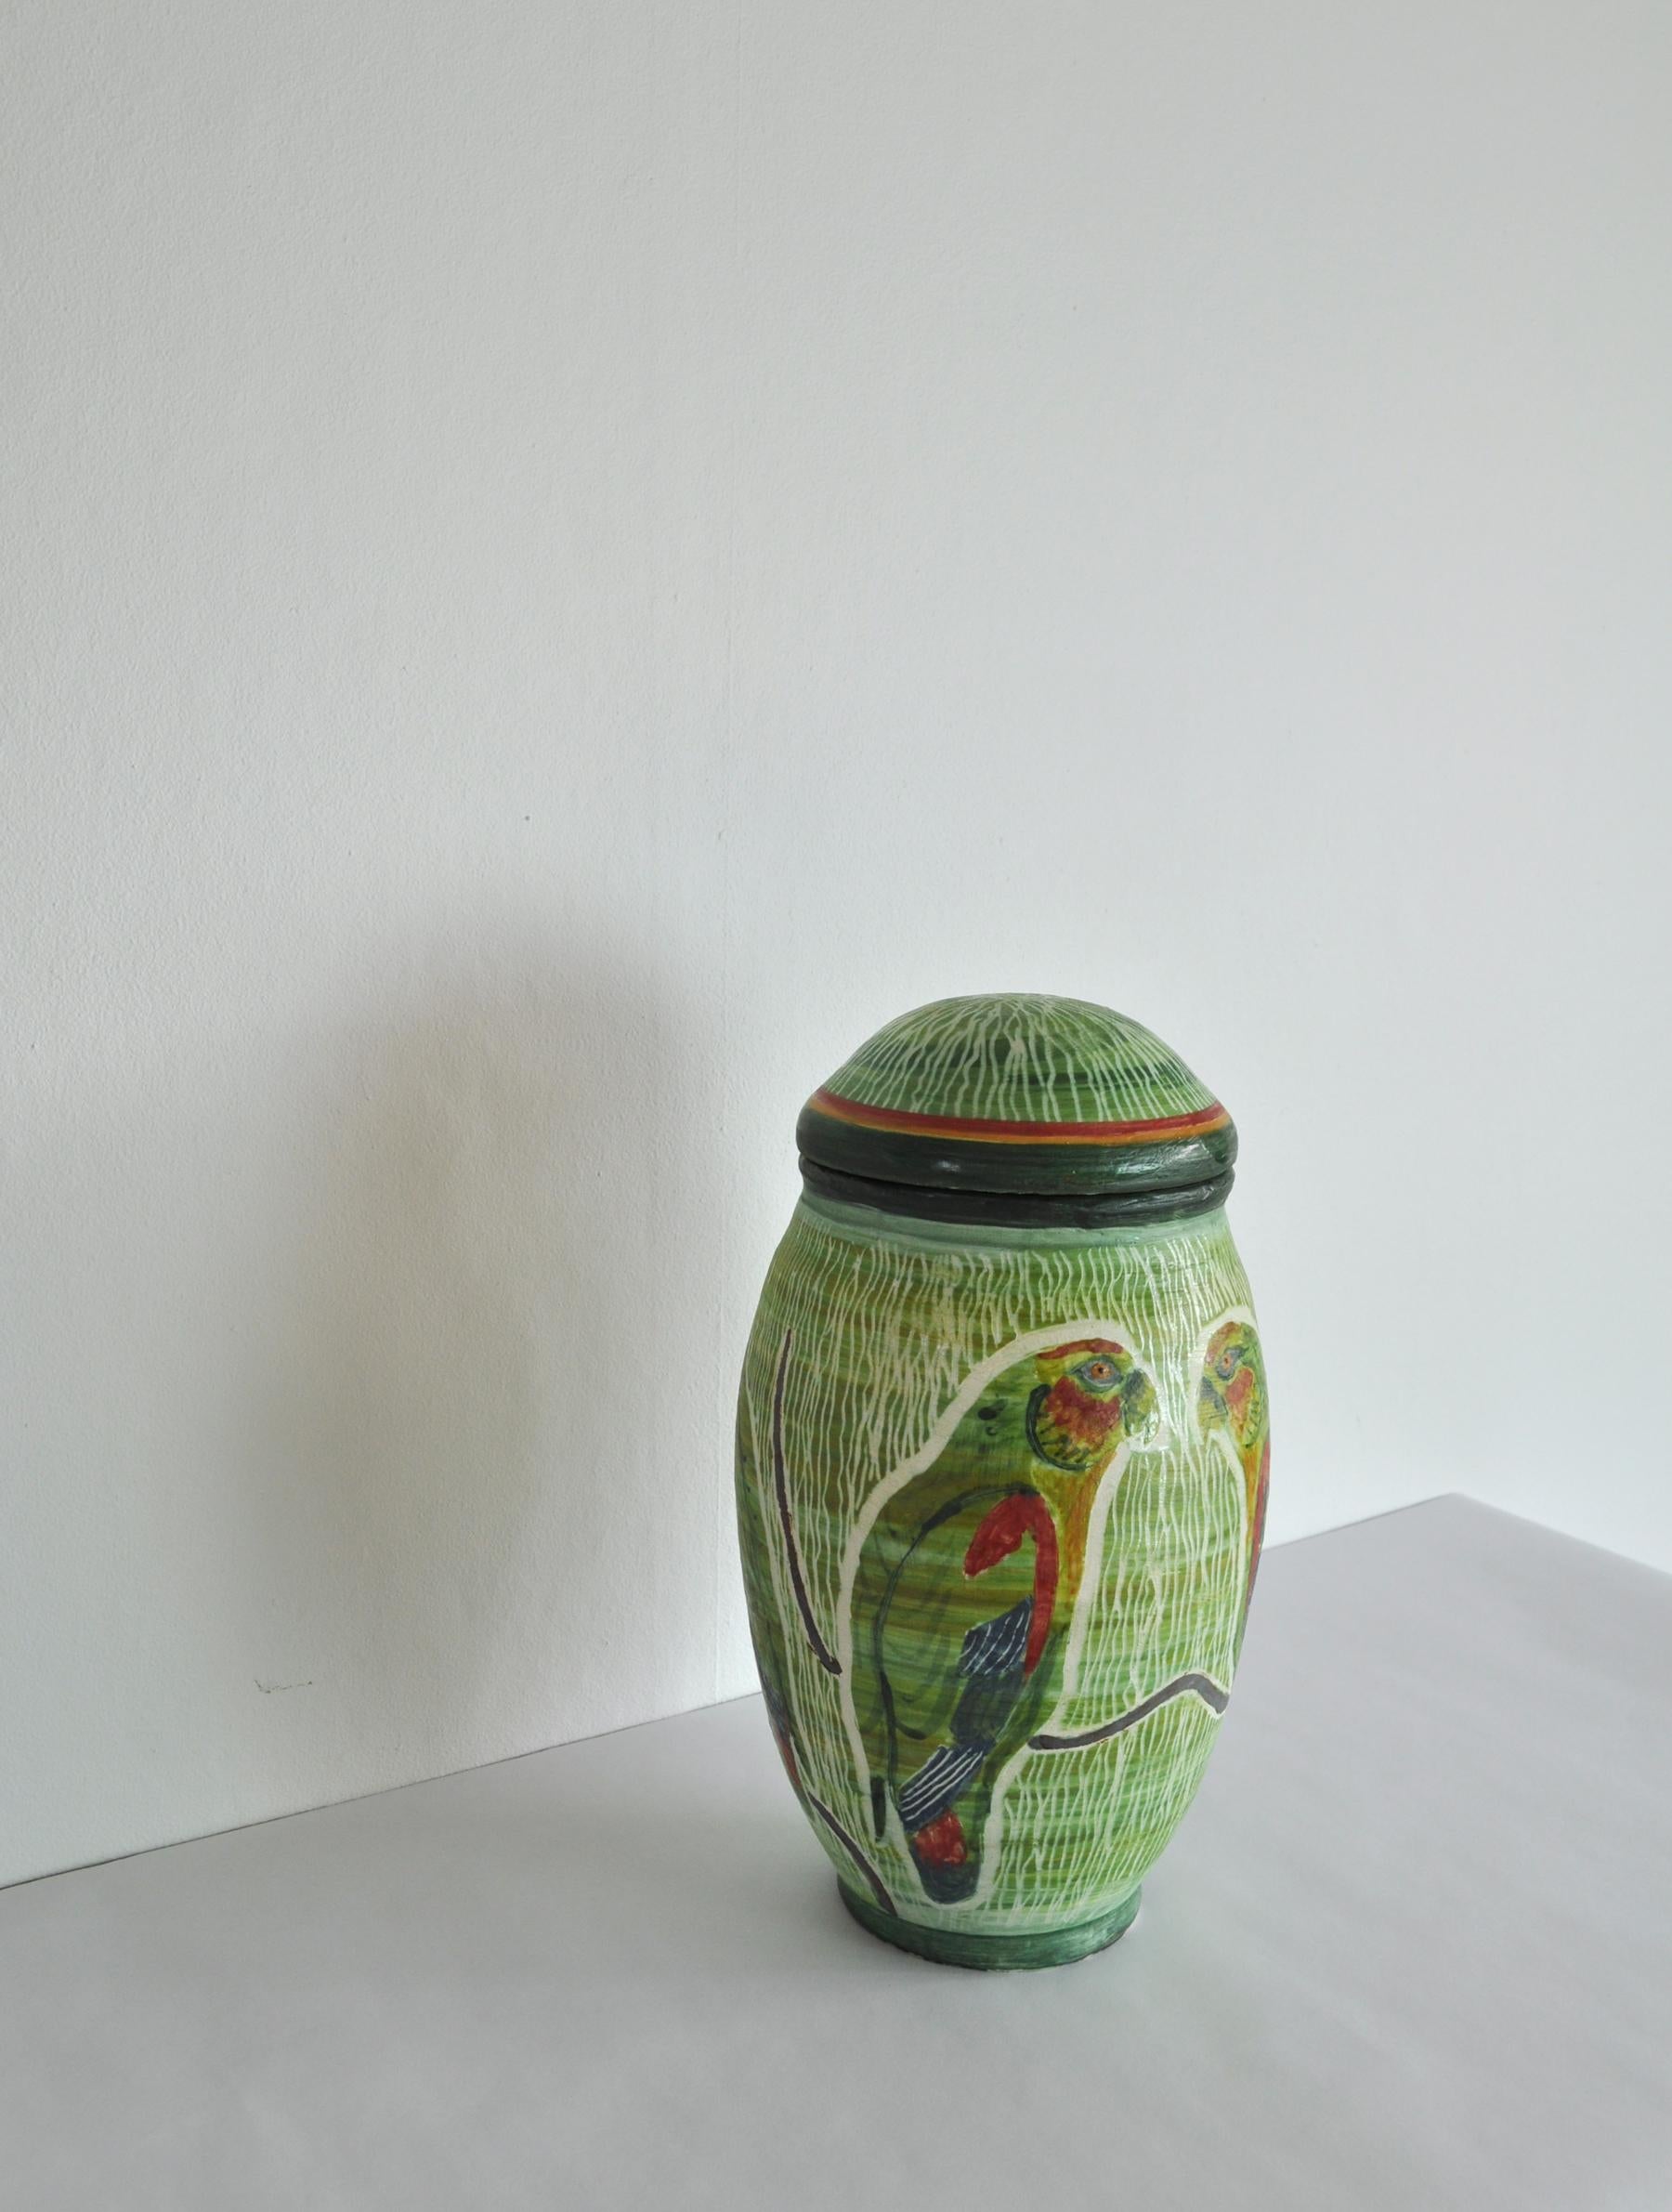 Unique Hand-Thrown and Hand-Glazed Danish Ceramic Vase or Jar In New Condition For Sale In Vordingborg, DK